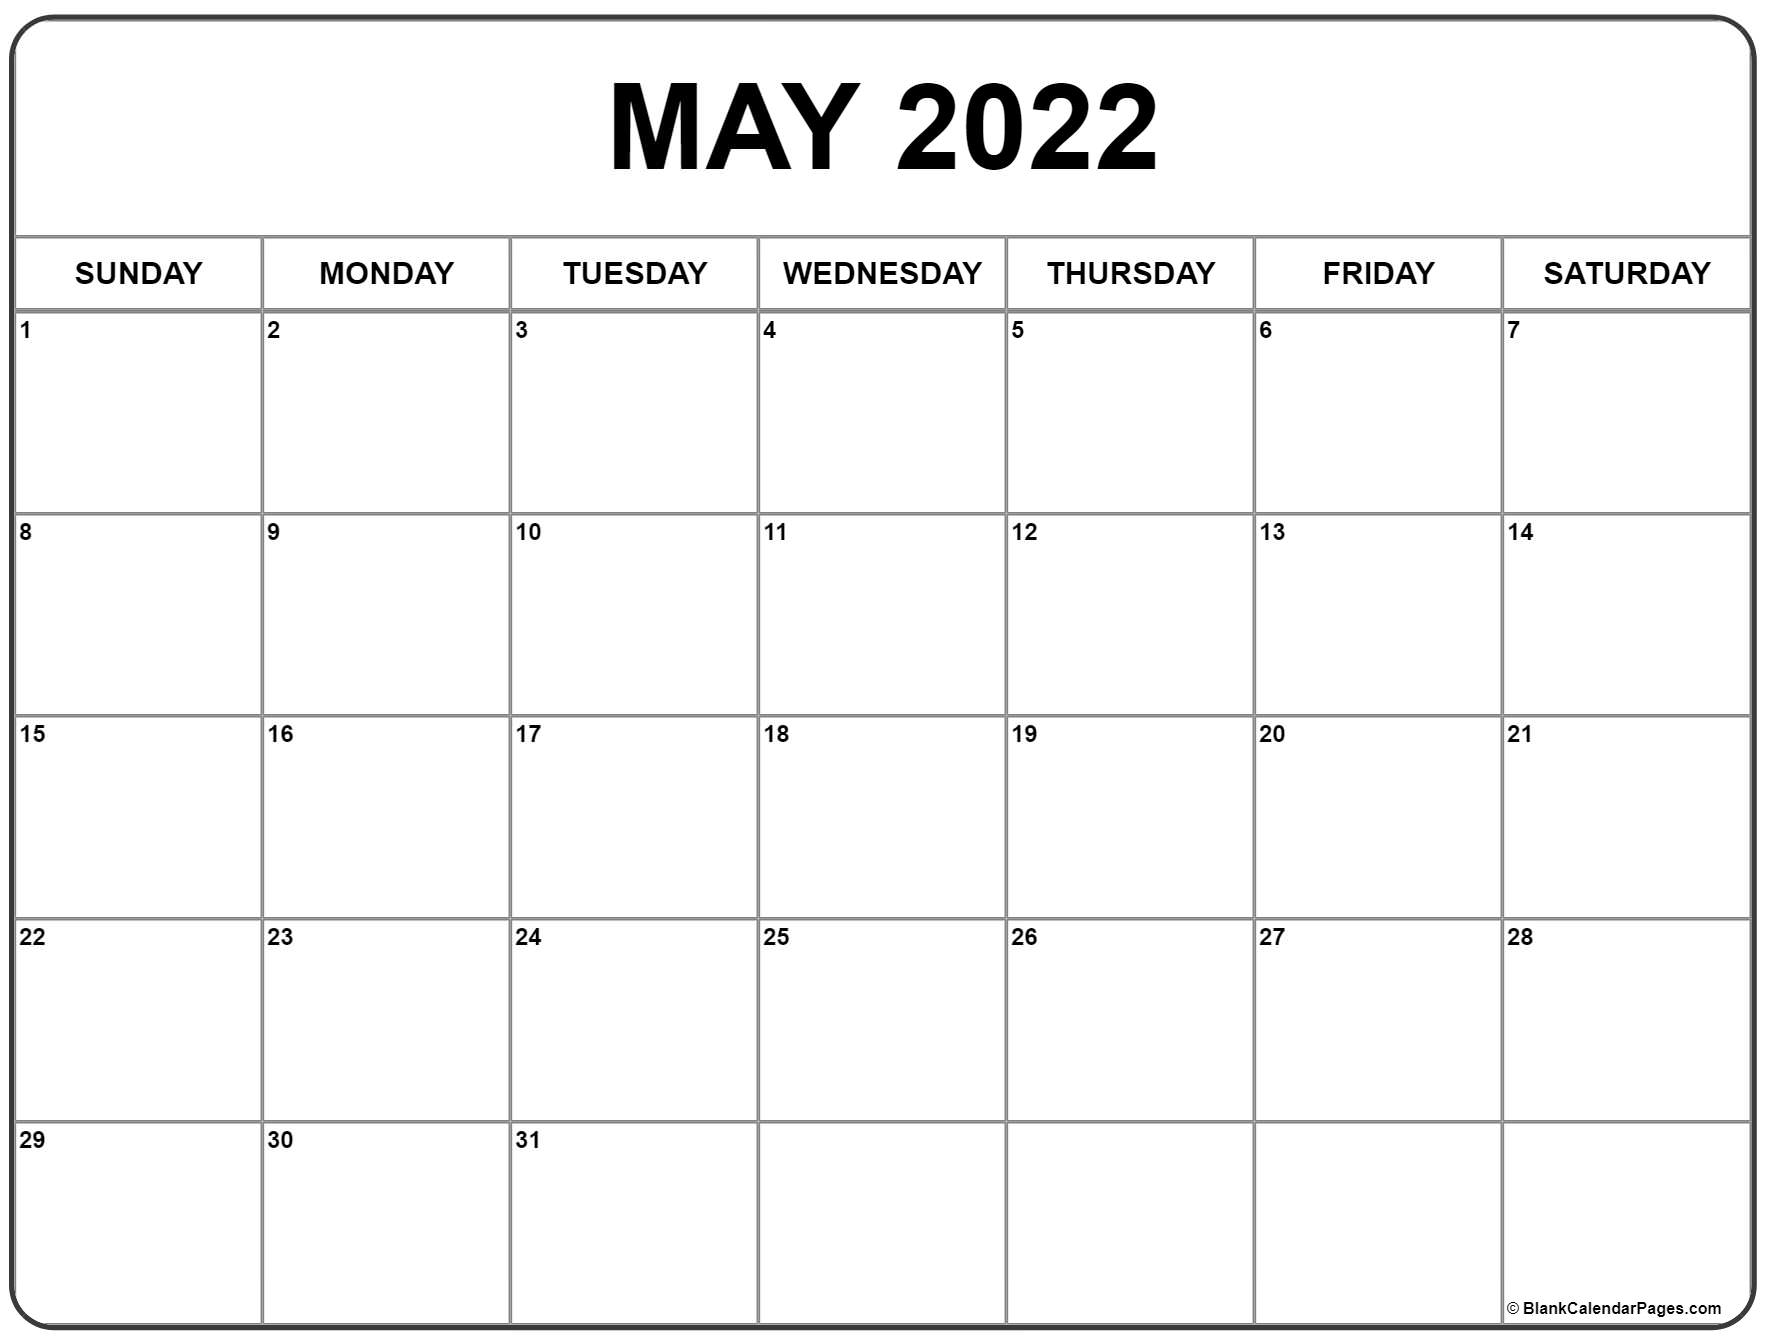 free-printable-blank-calendar-may-2022-2022-freeblankcalendar